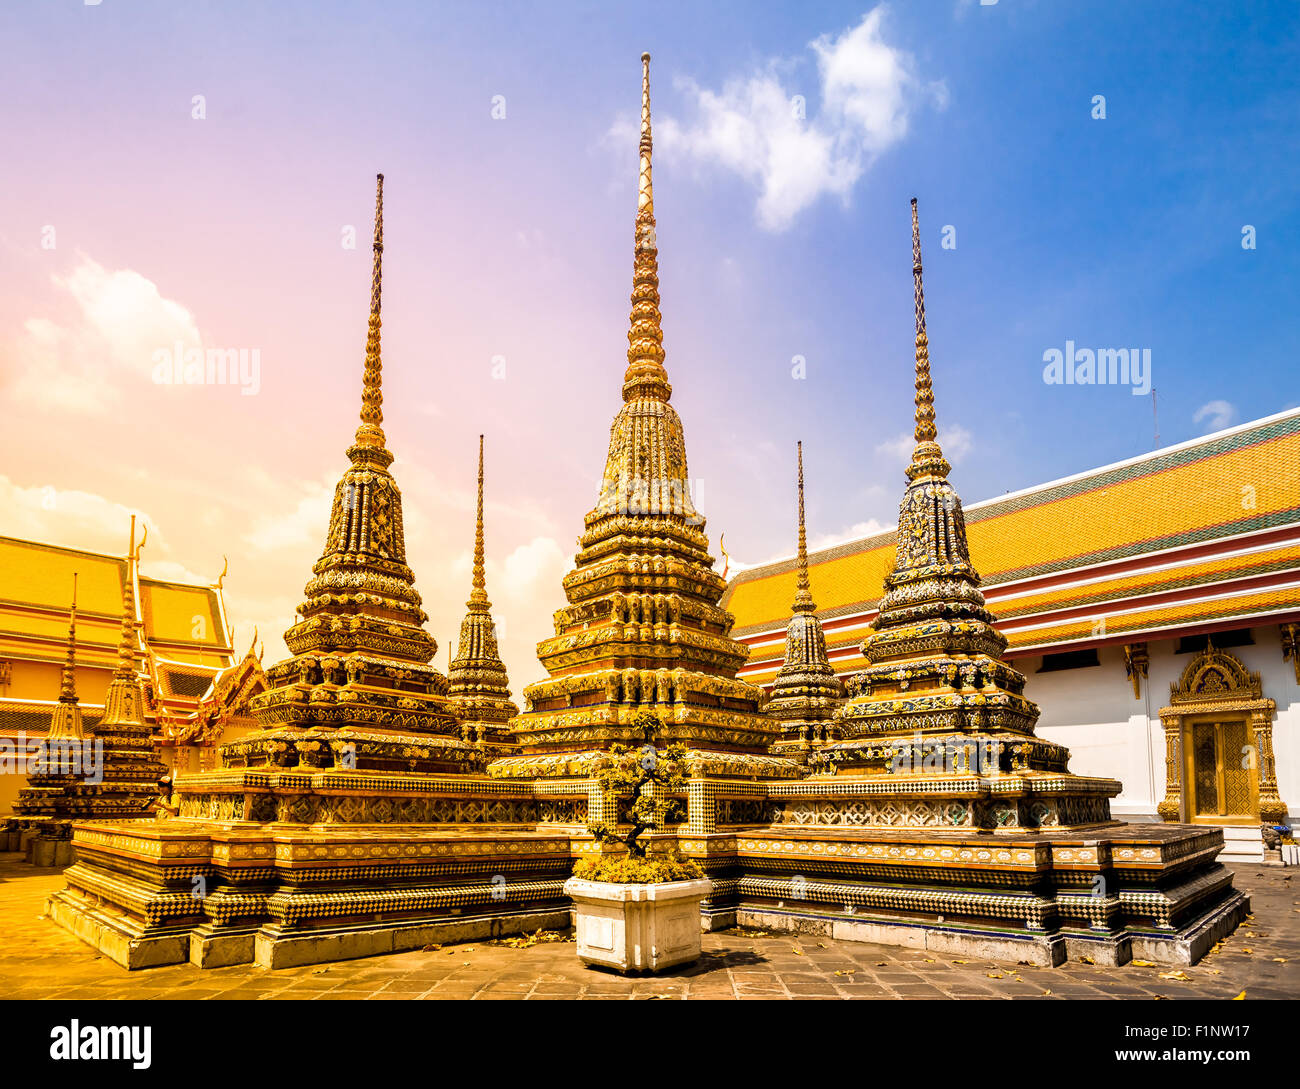 Wat Phra Chetupon Vimolmangklararm Stock Photo